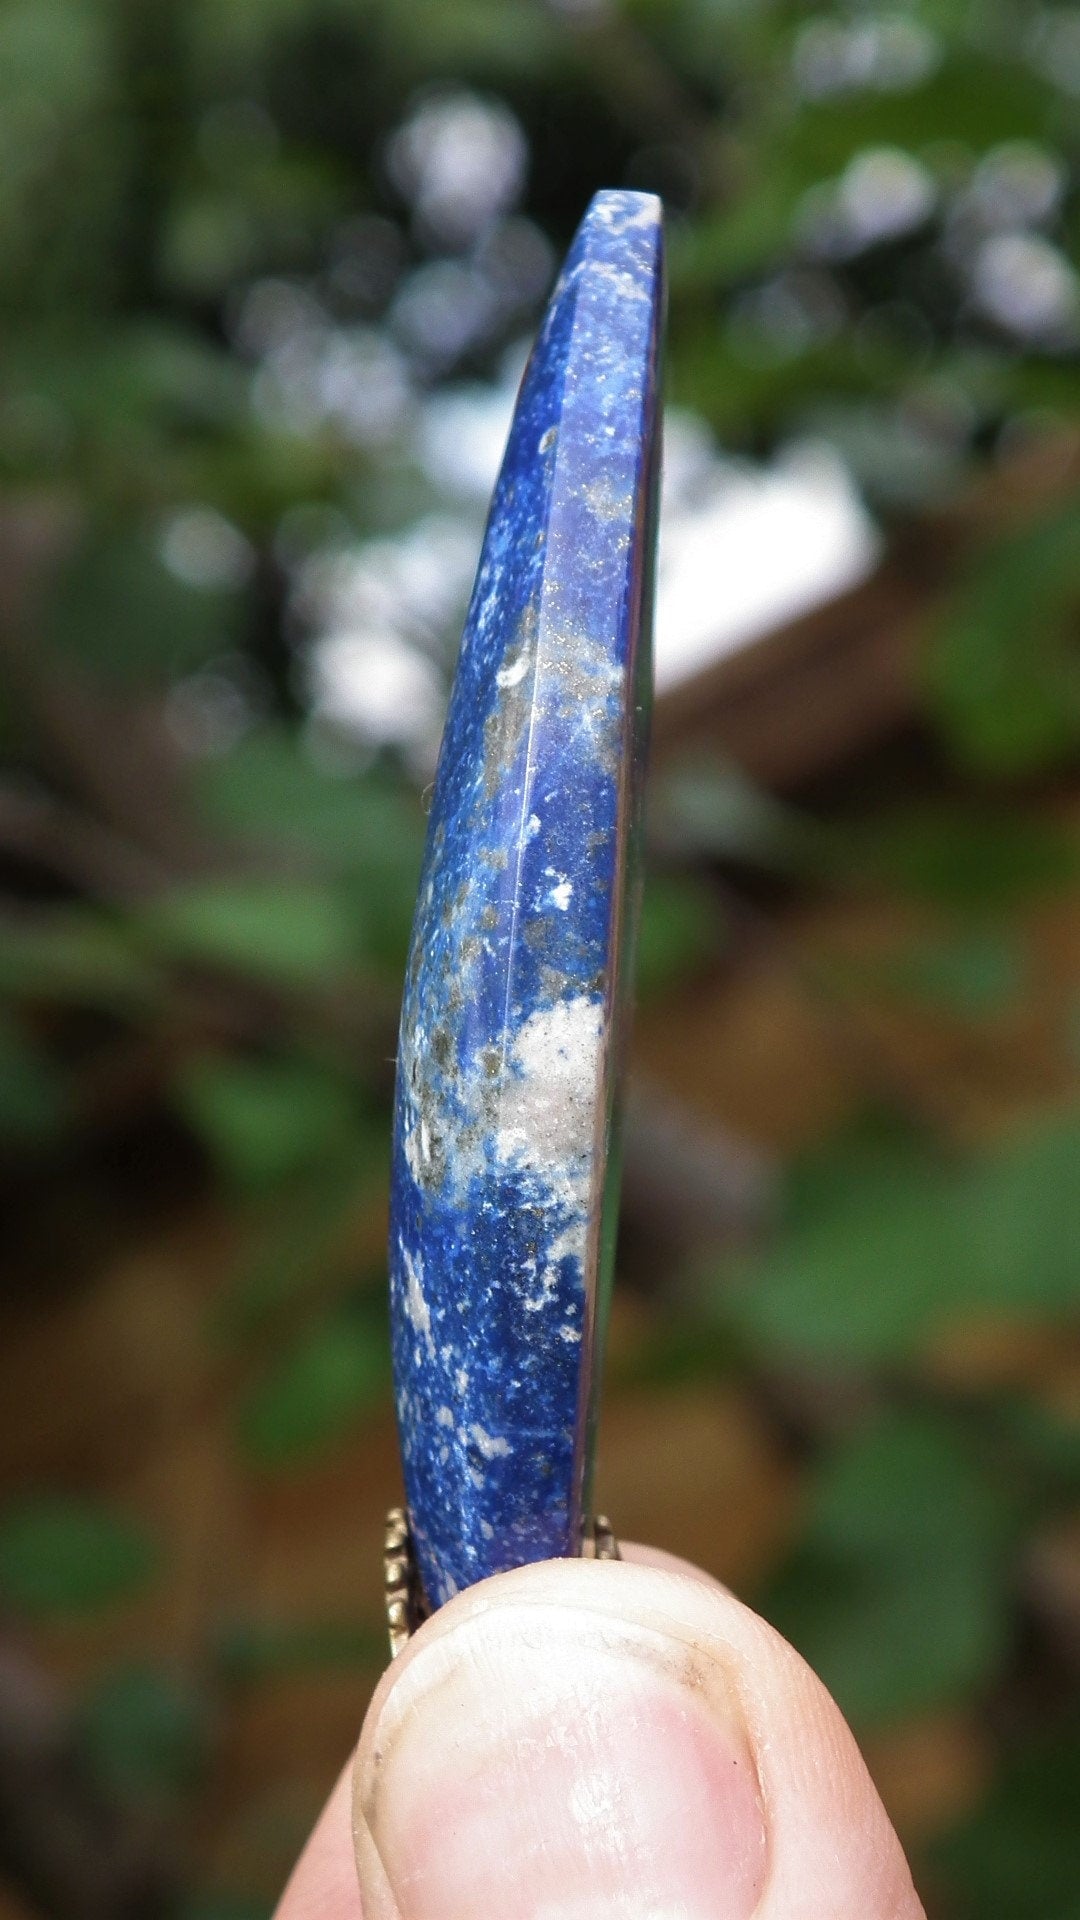 Lapis Lazuli Necklace / Lapis Lazuli pendant / bronze Bail